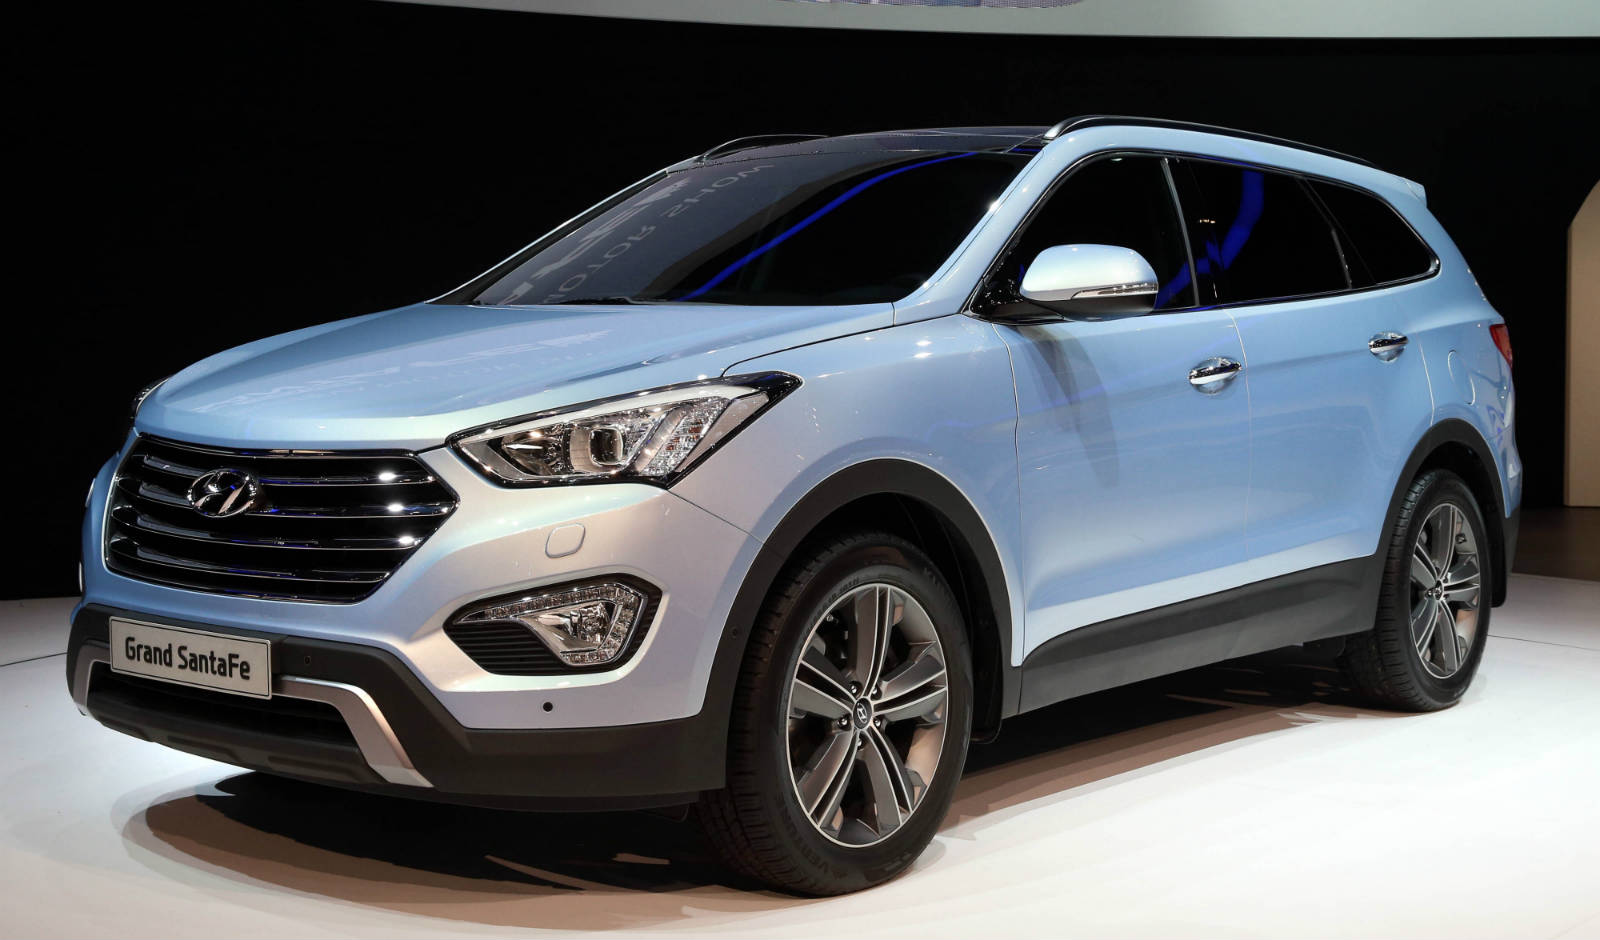 Hyundai Launched Grand Santa Fe to European Customers in